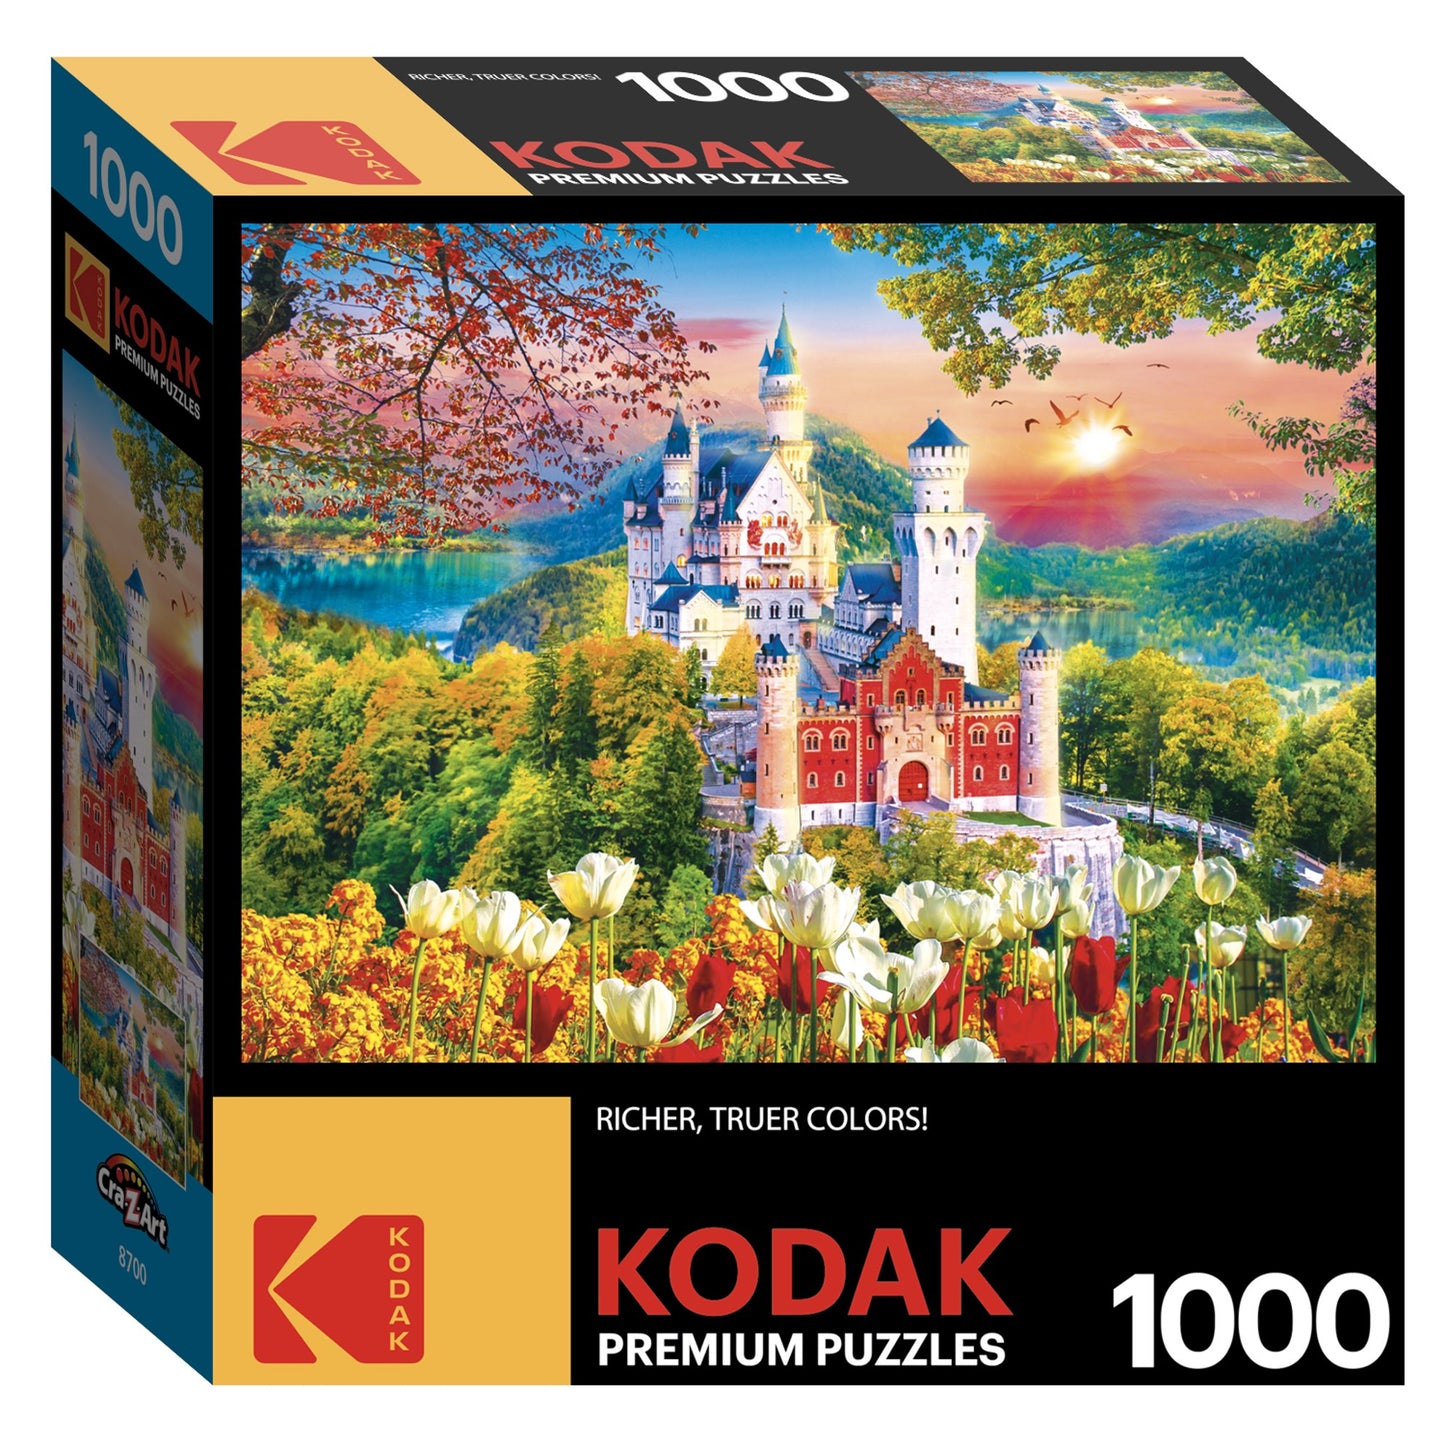 Famous Neuschwanstein Medieval Castle 1000 Piece Jigsaw Puzzle